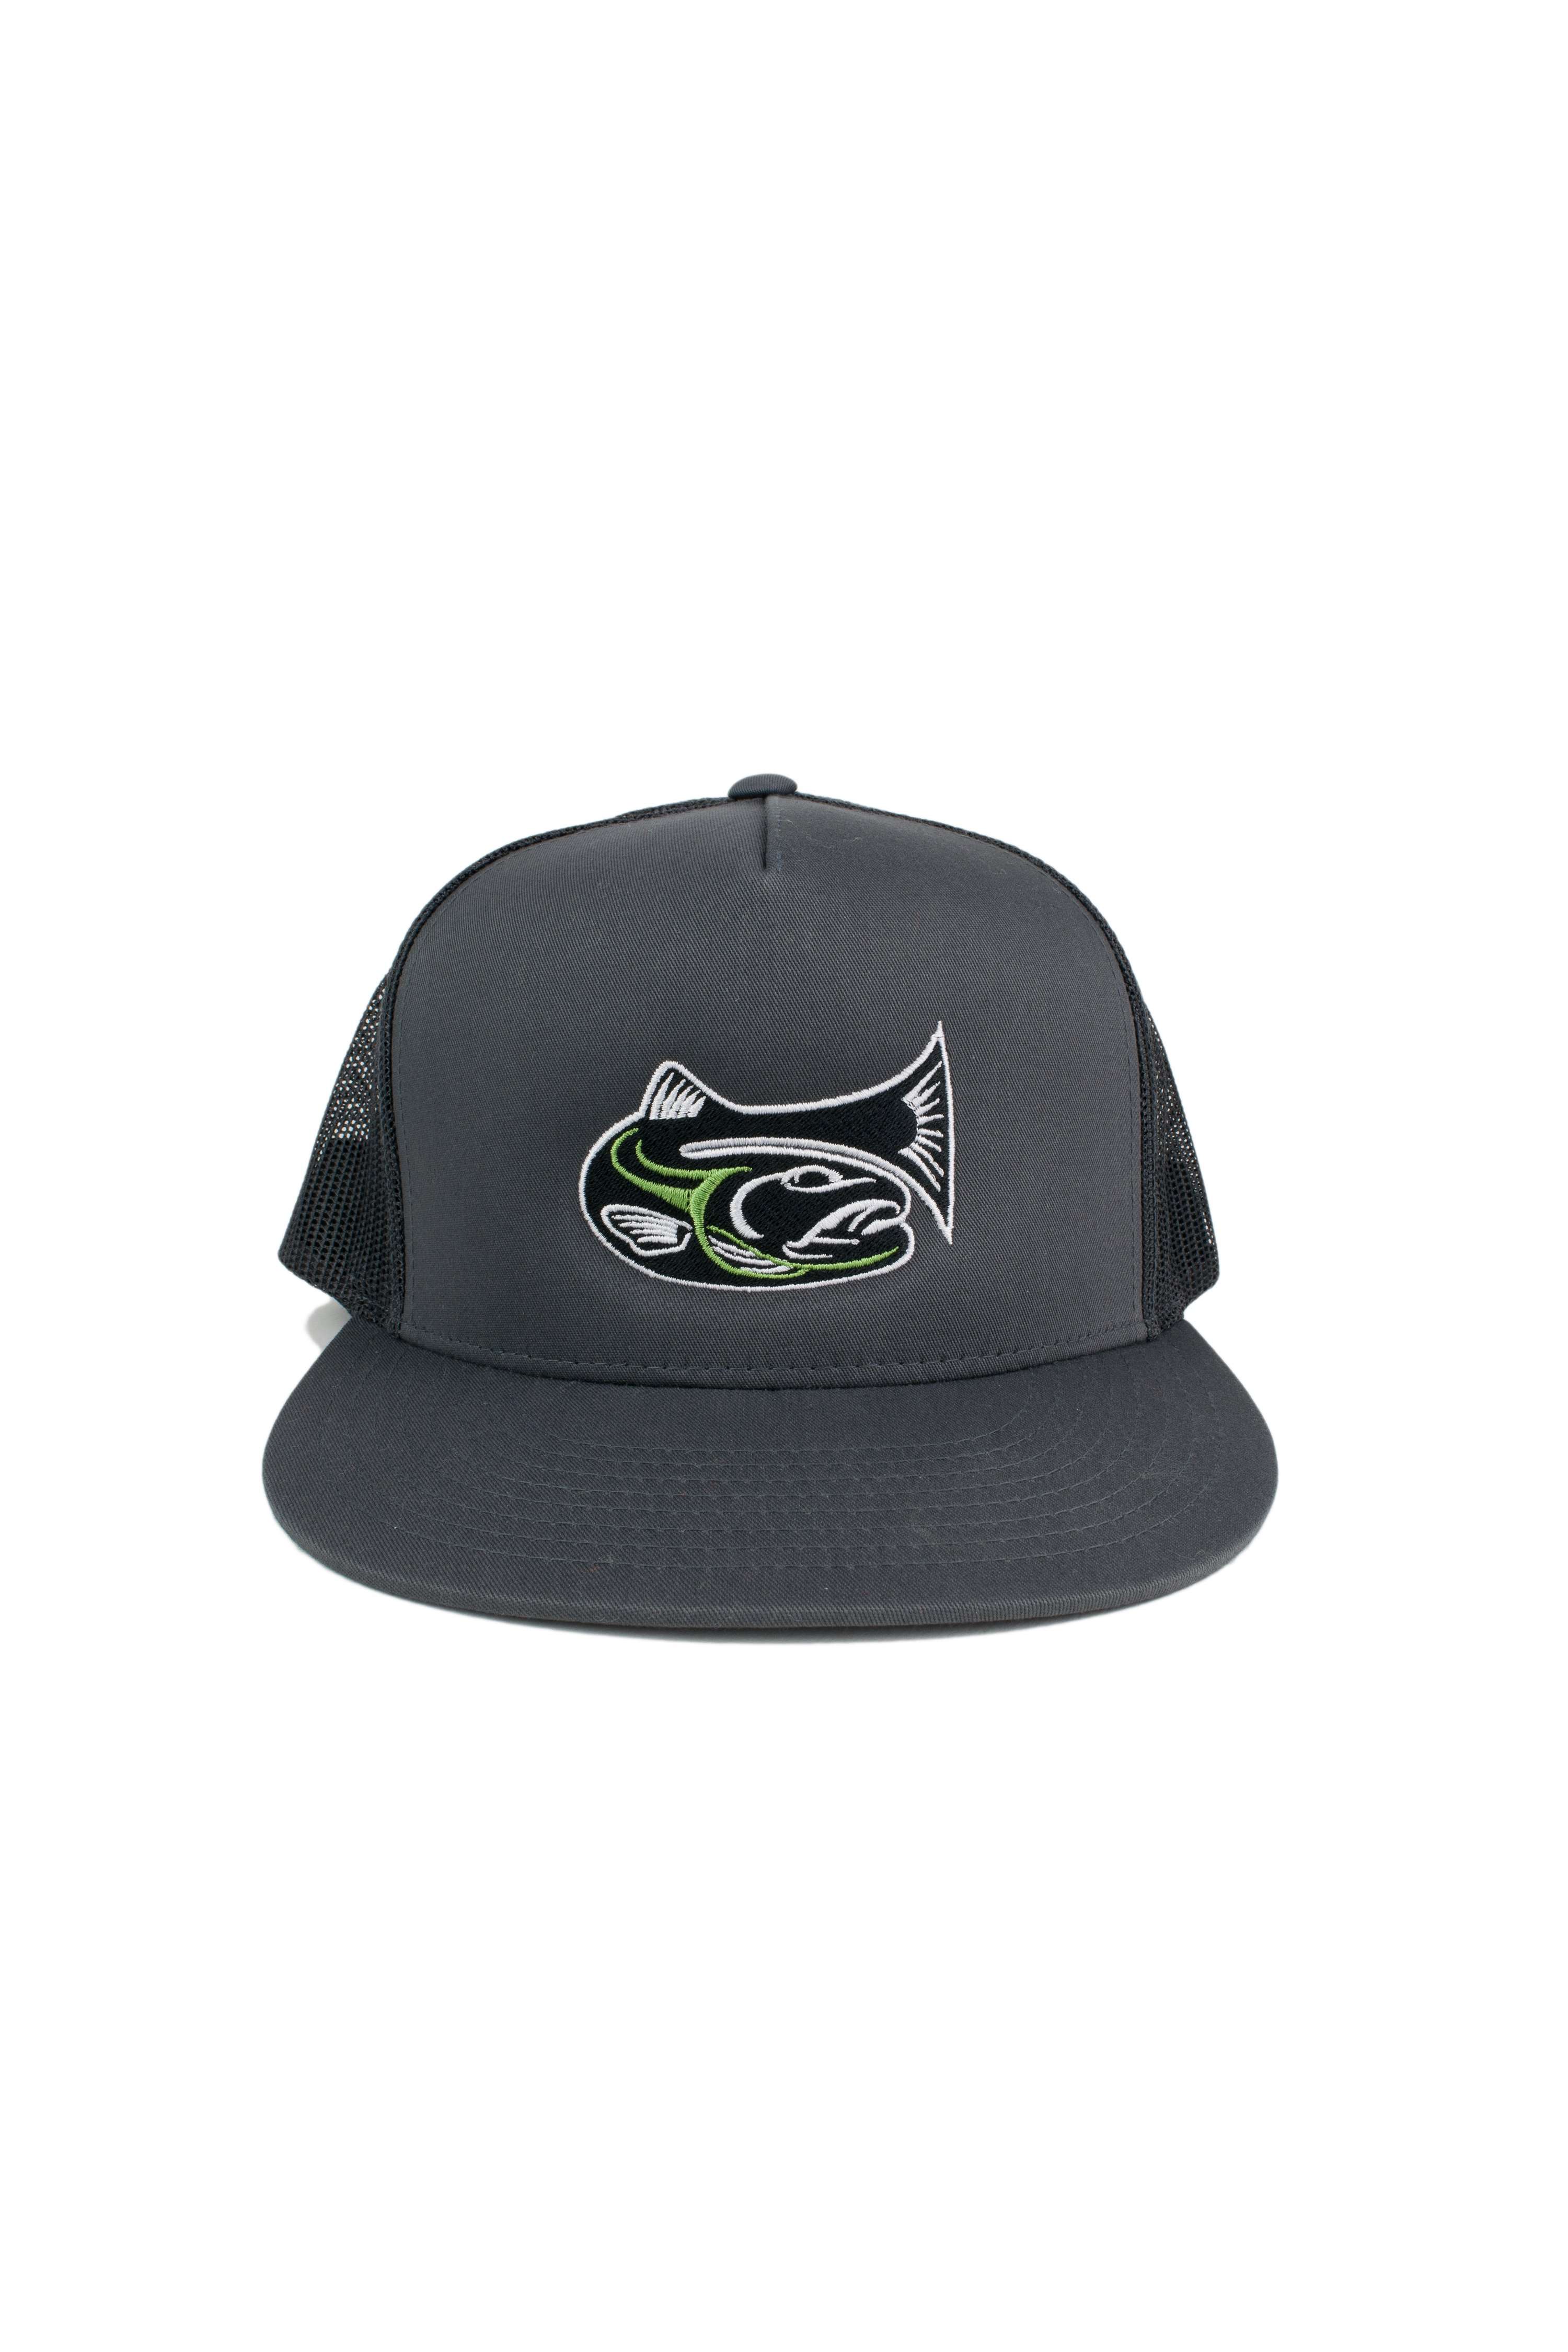 Drifthook Snapback Flat Bill Hat—Gray with Box Logo - Drifthook